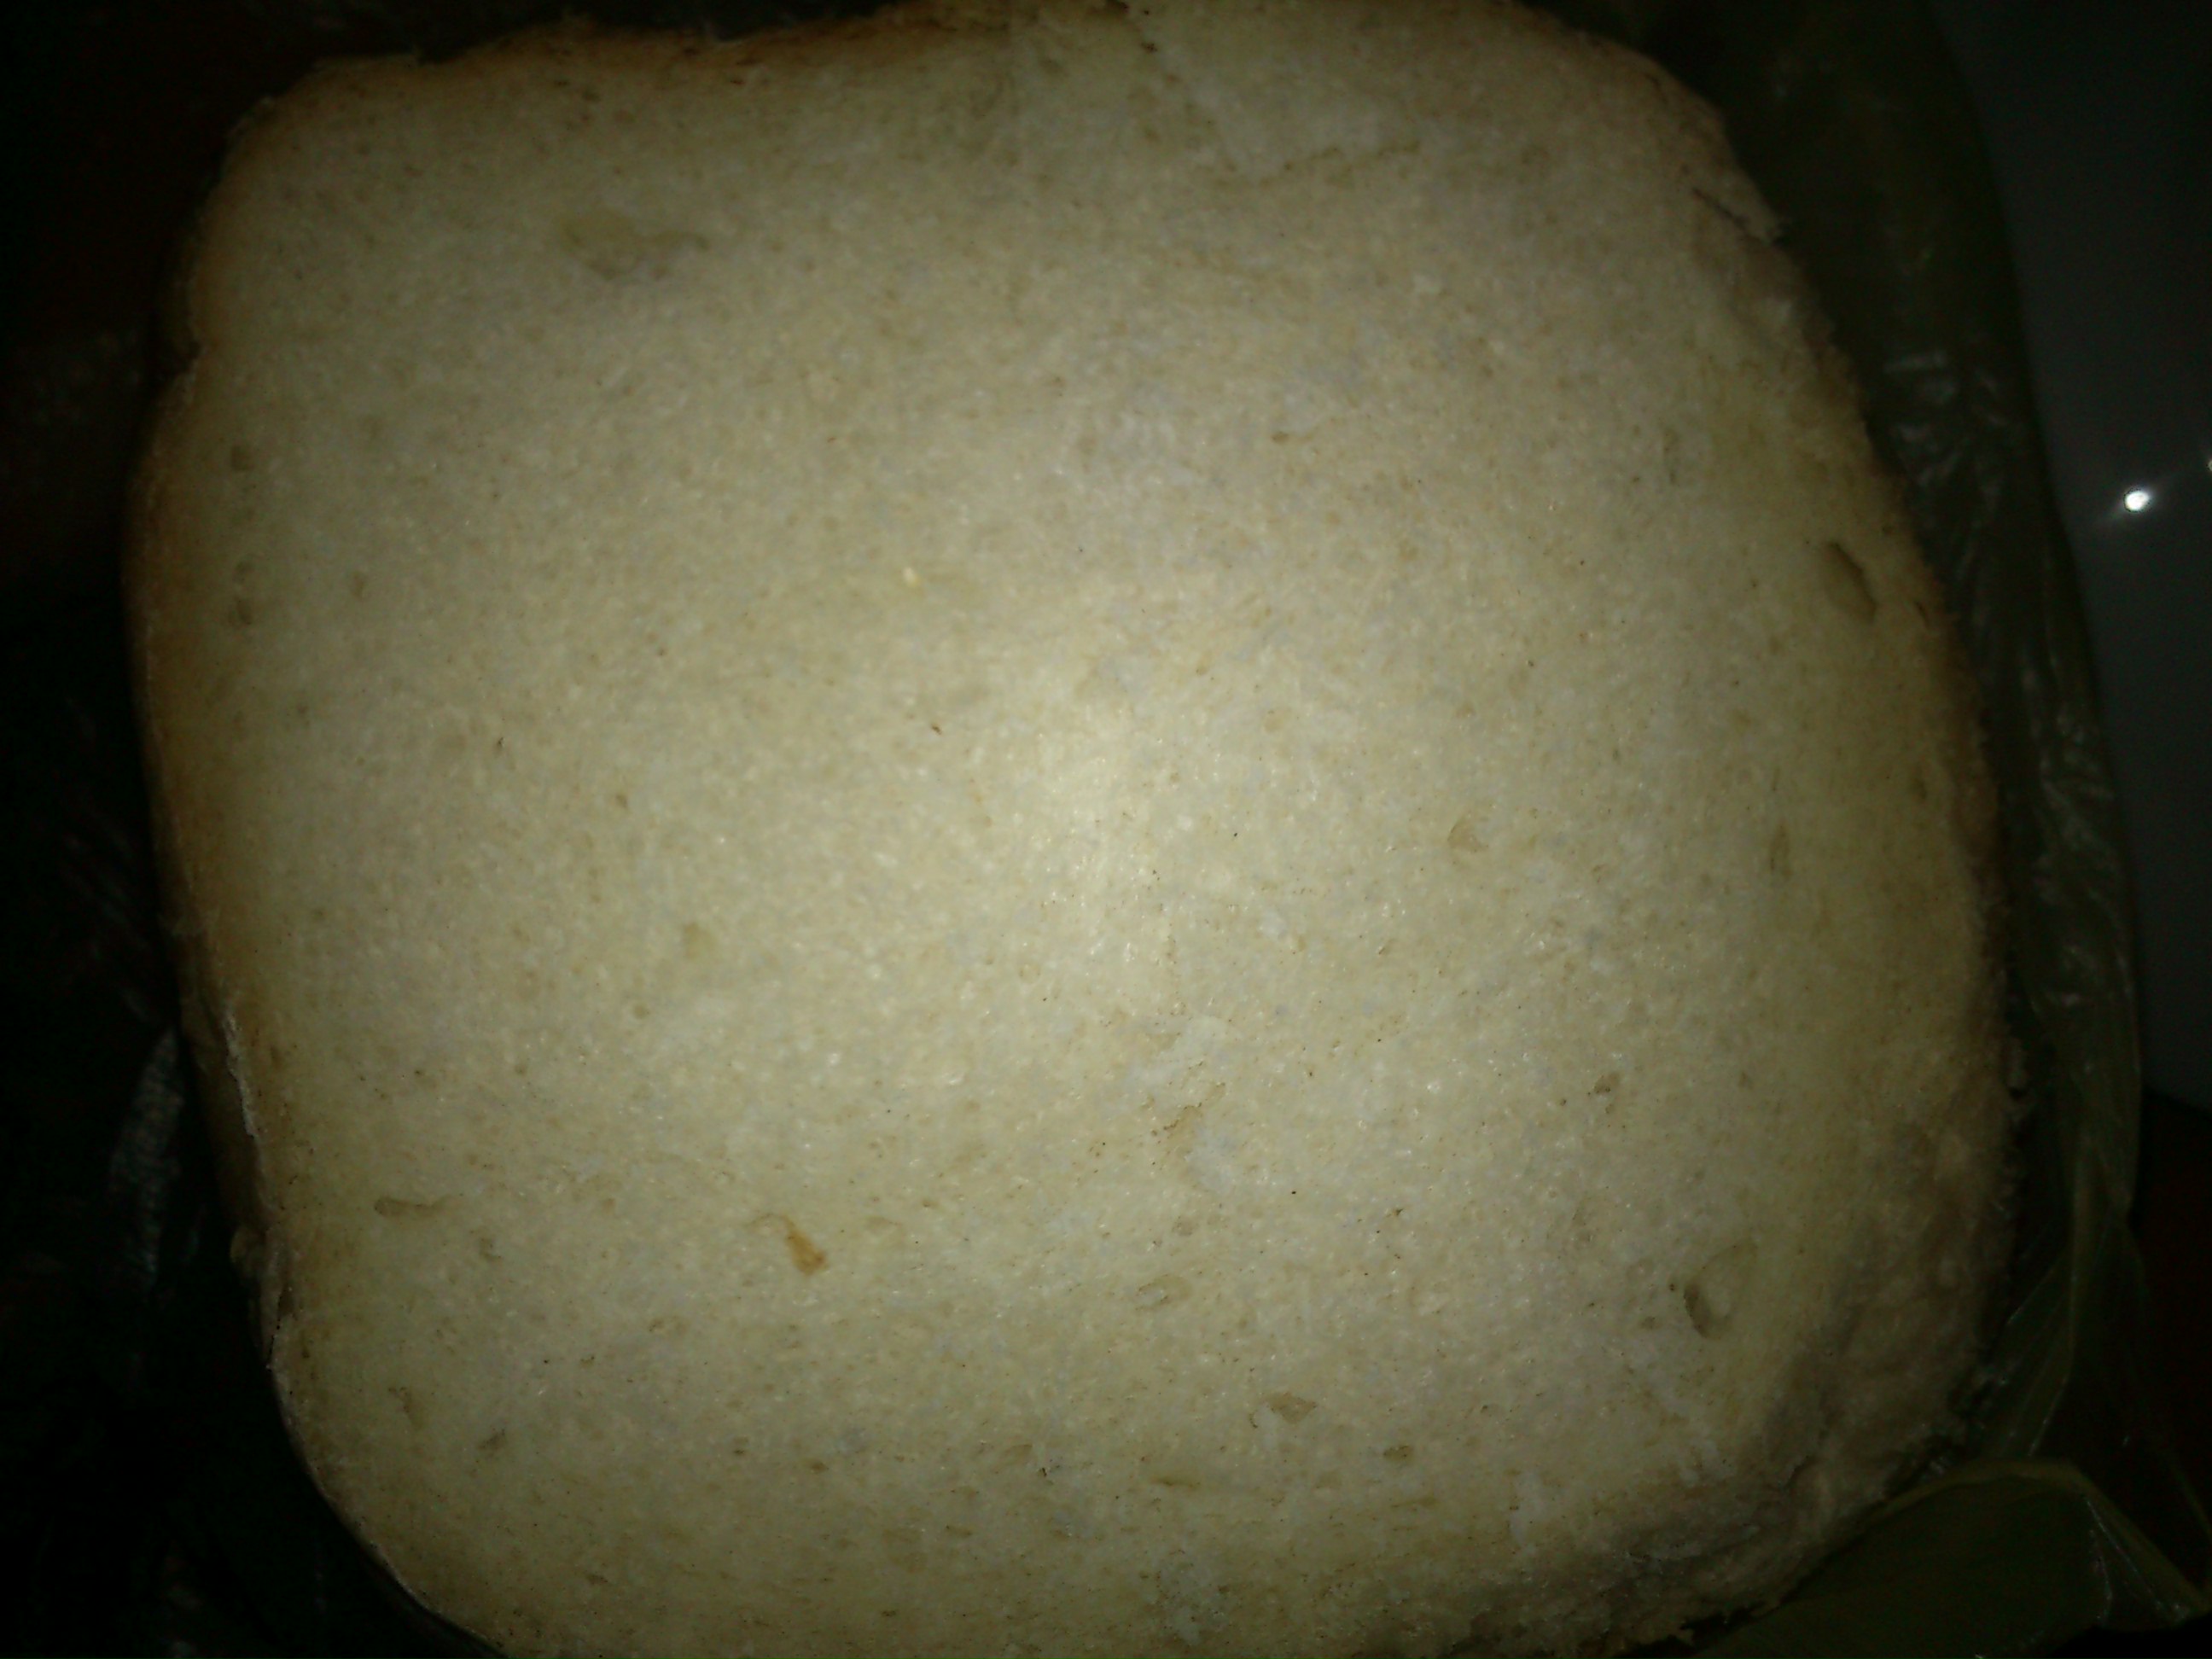 Alaska BM2600. White bread in a bread maker